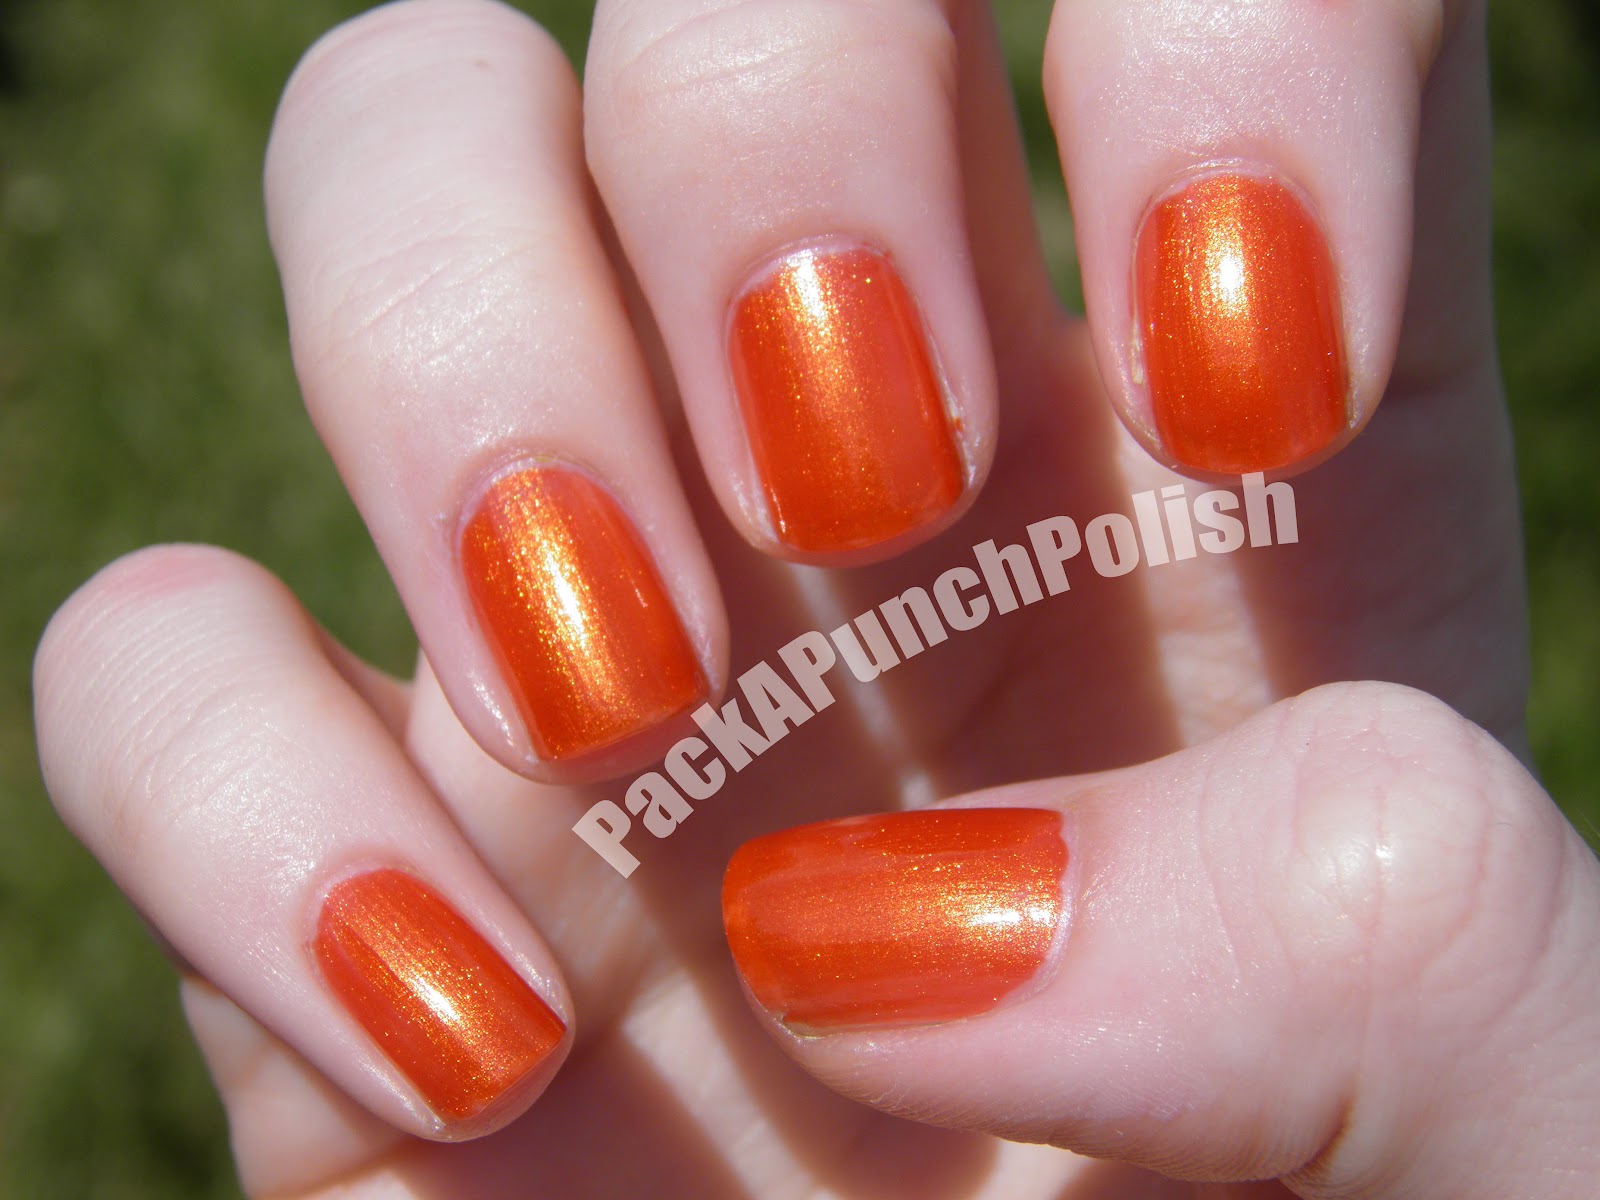 8. Sinful Colors Courtney Orange Nail Polish Shade - wide 4